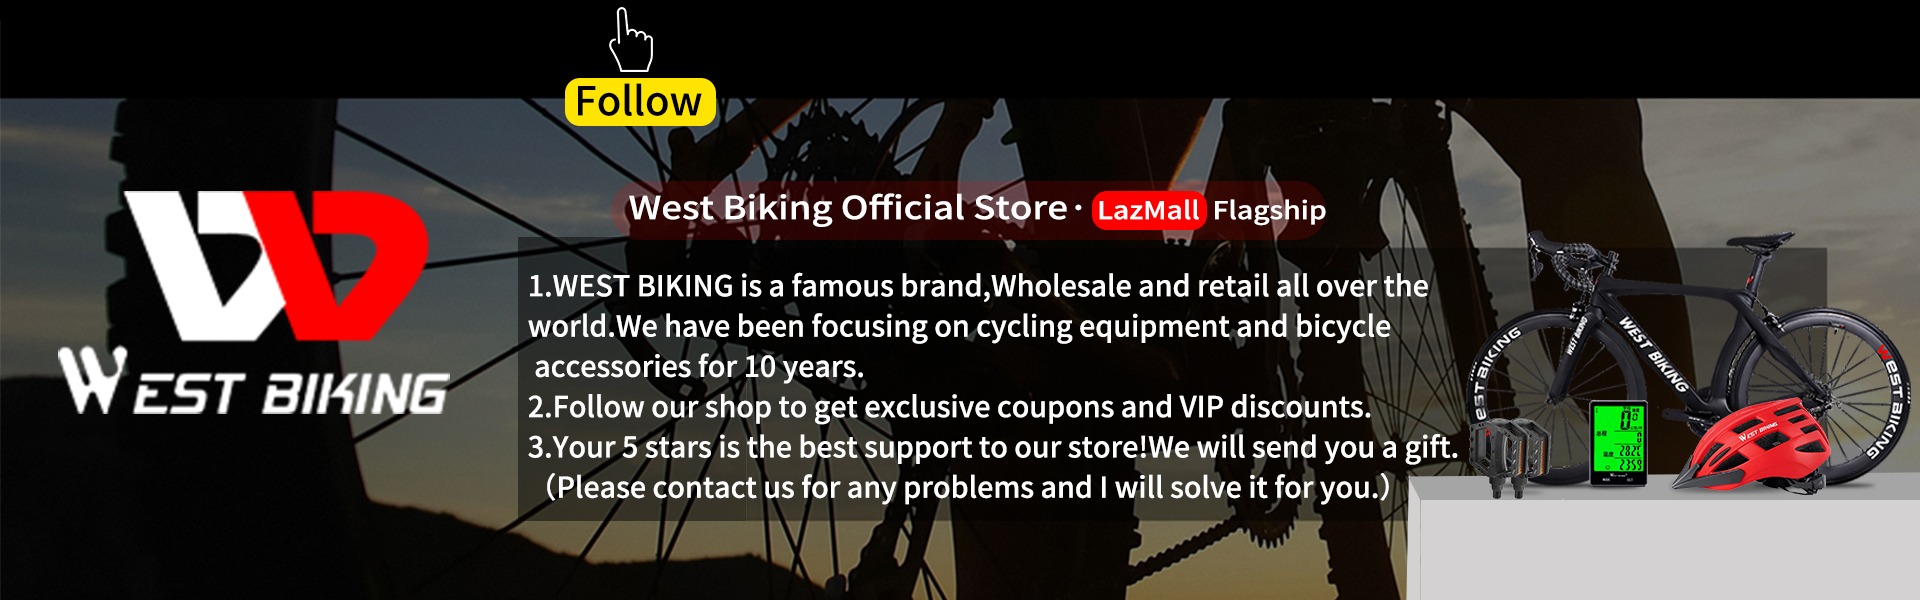 west biking official store